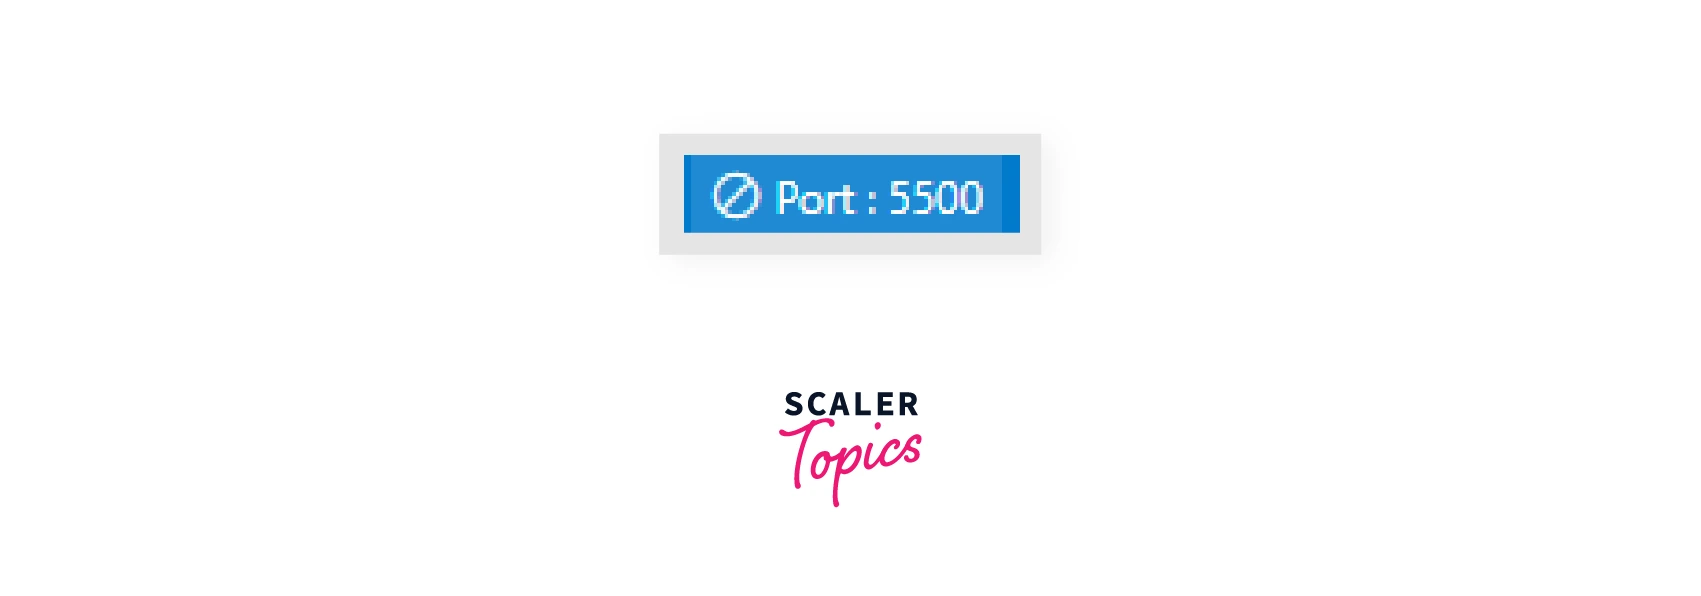 port 5500 image